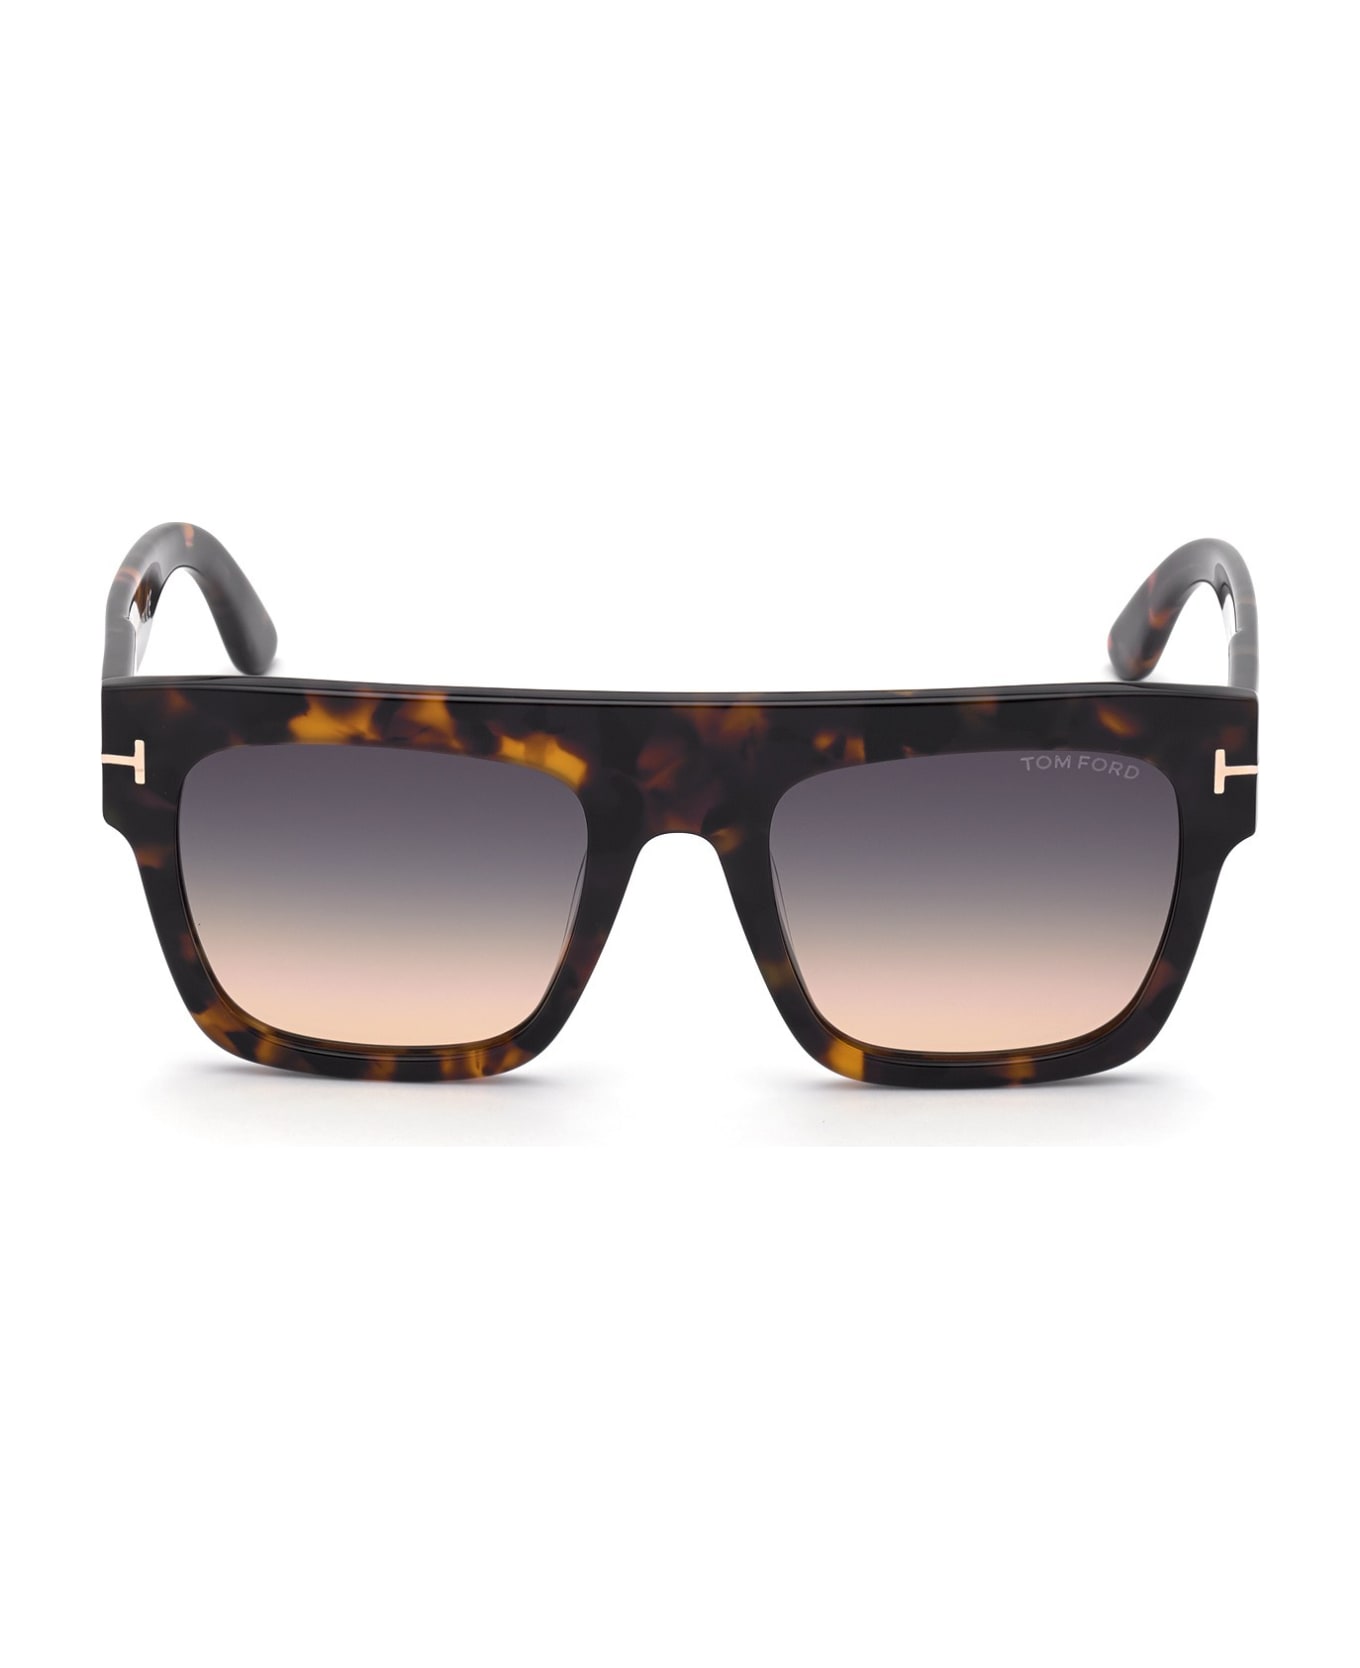 Tom Ford Eyewear Sunglasses - Tabacco/Viola-rosa